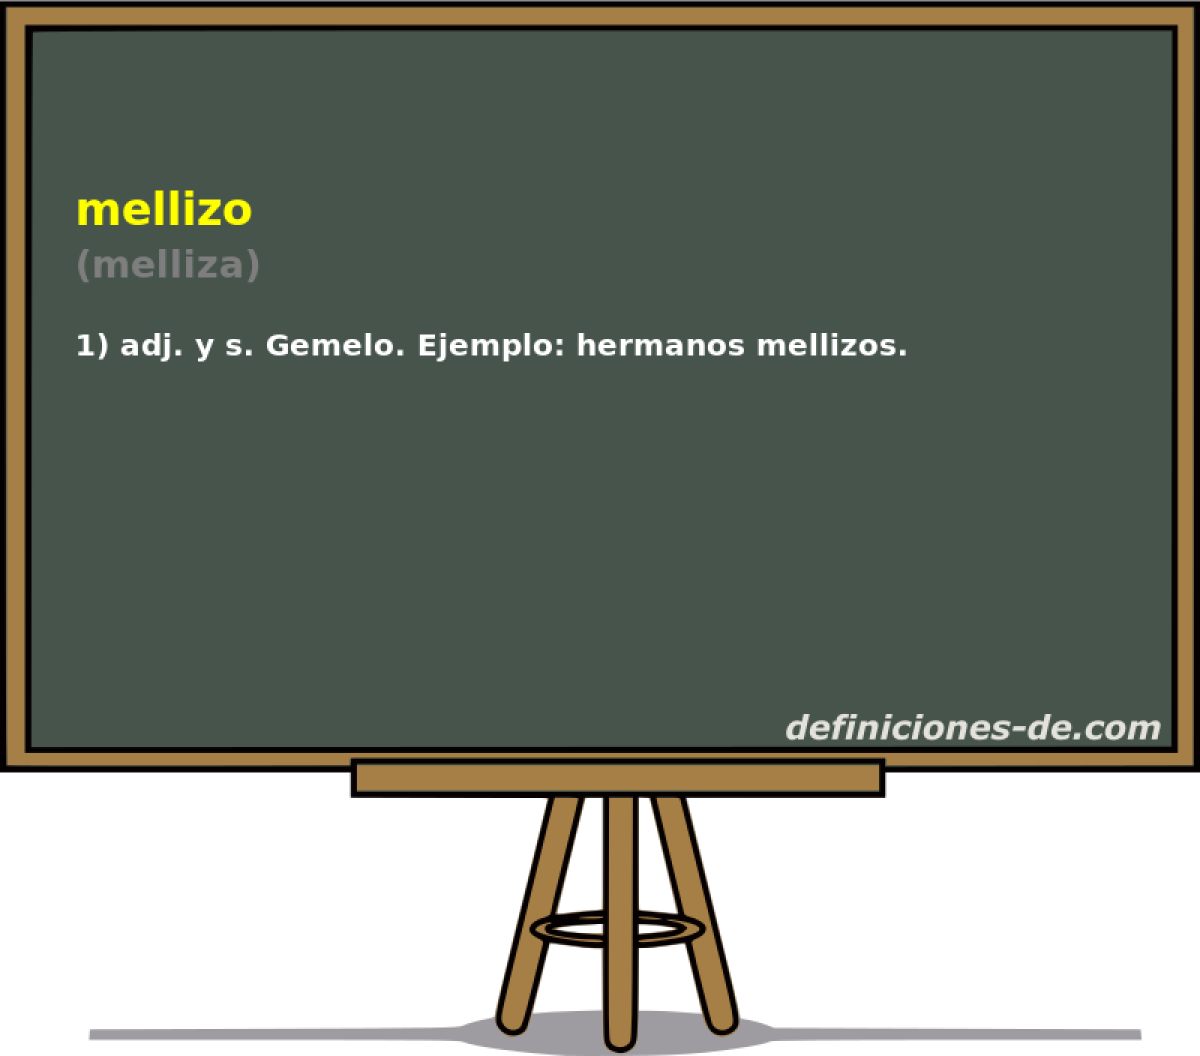 mellizo (melliza)